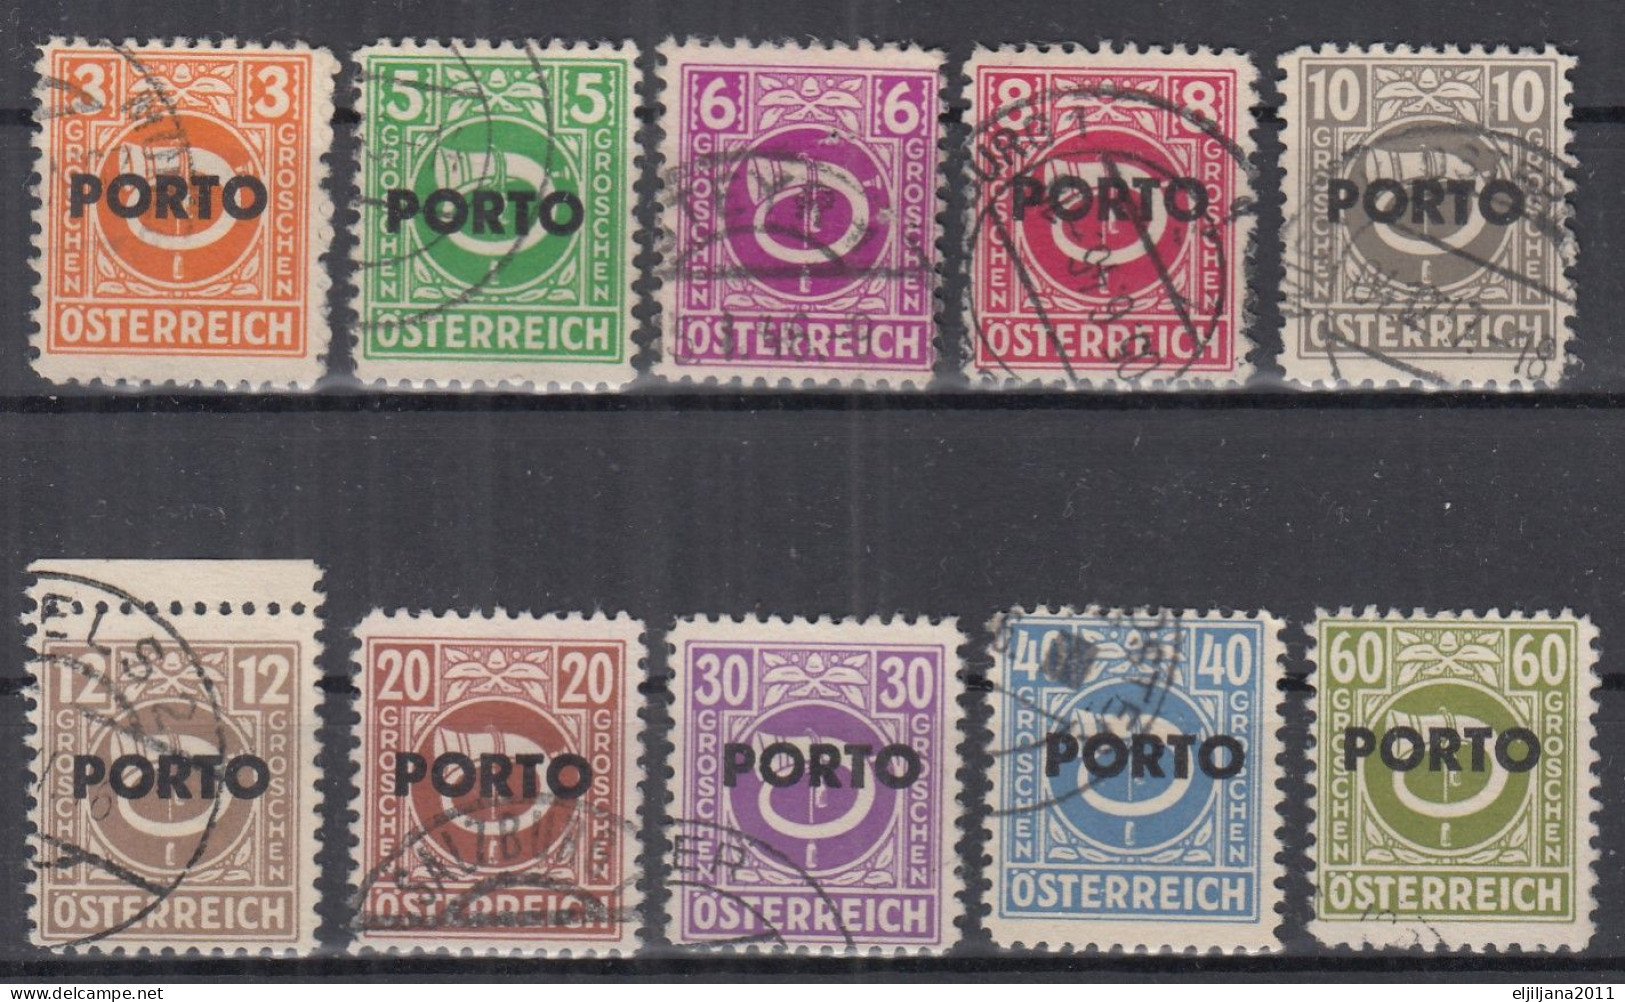 ⁕  Austria - Österreich 1946 ⁕ Postage Due - Overprint PORTO ⁕ 10v Used - Taxe